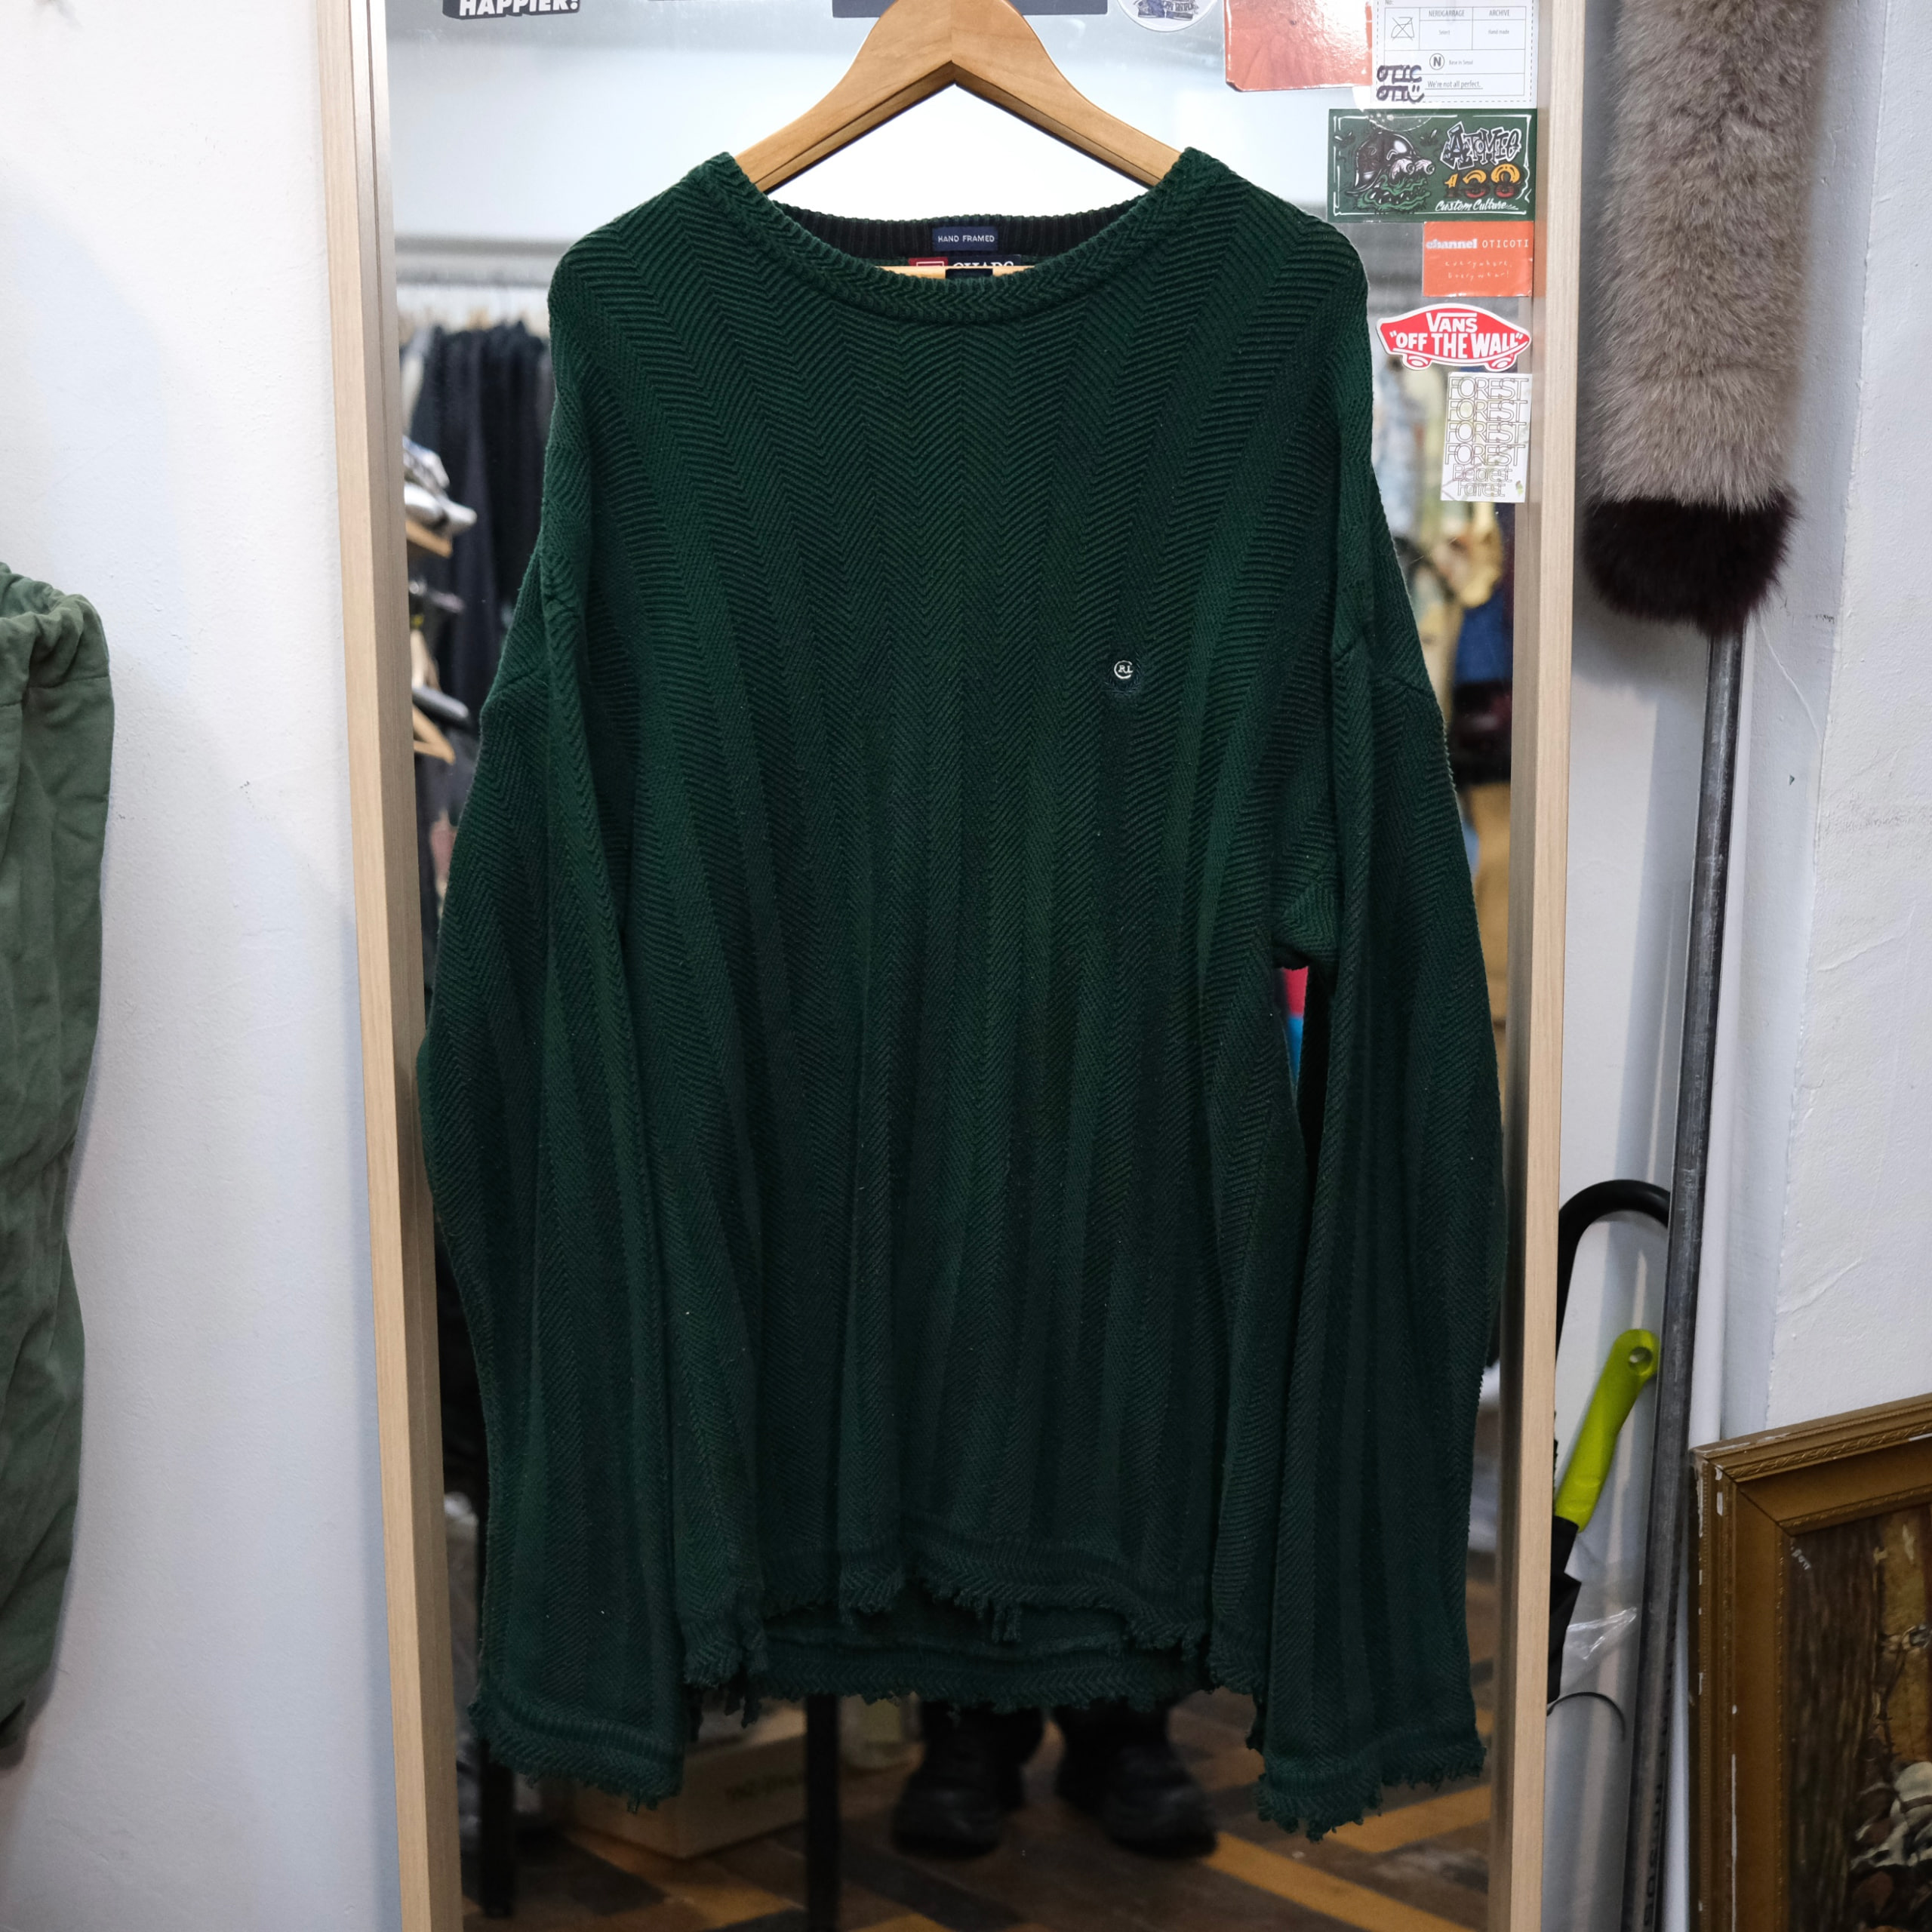 (Custom line) Chaps knit dark green long sleeve